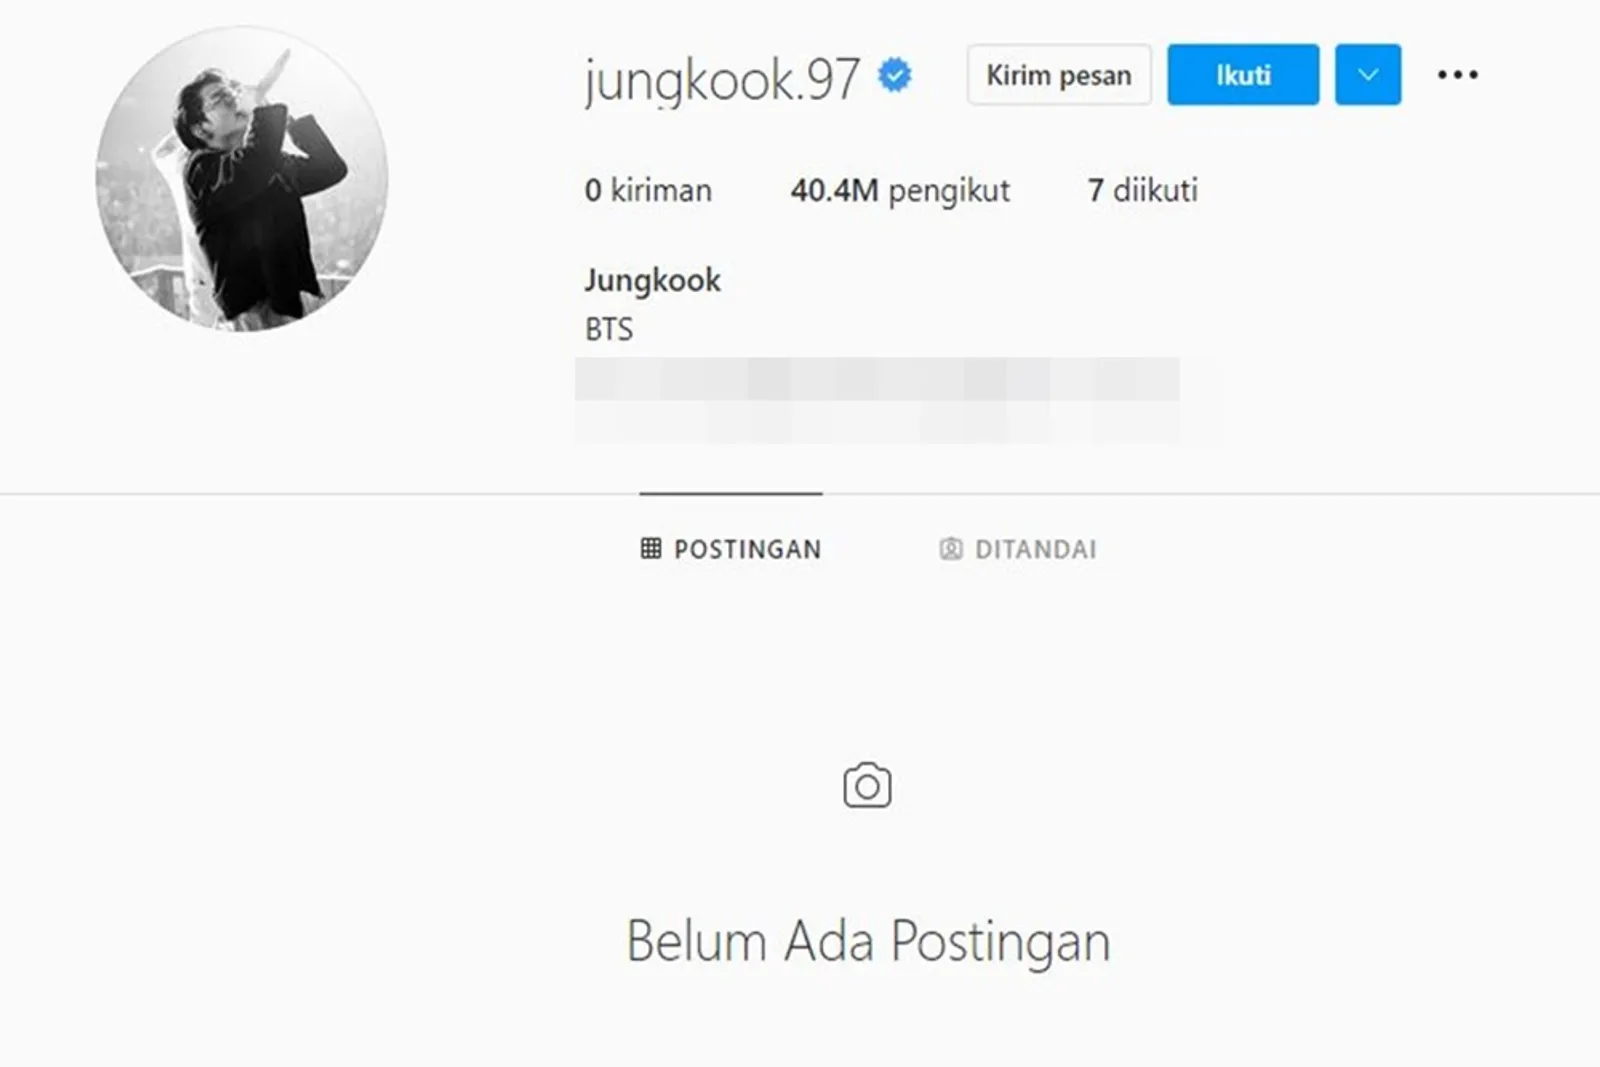 Jungkook 'BTS' Hapus Postingan Instagram, Followers Tetap Naik